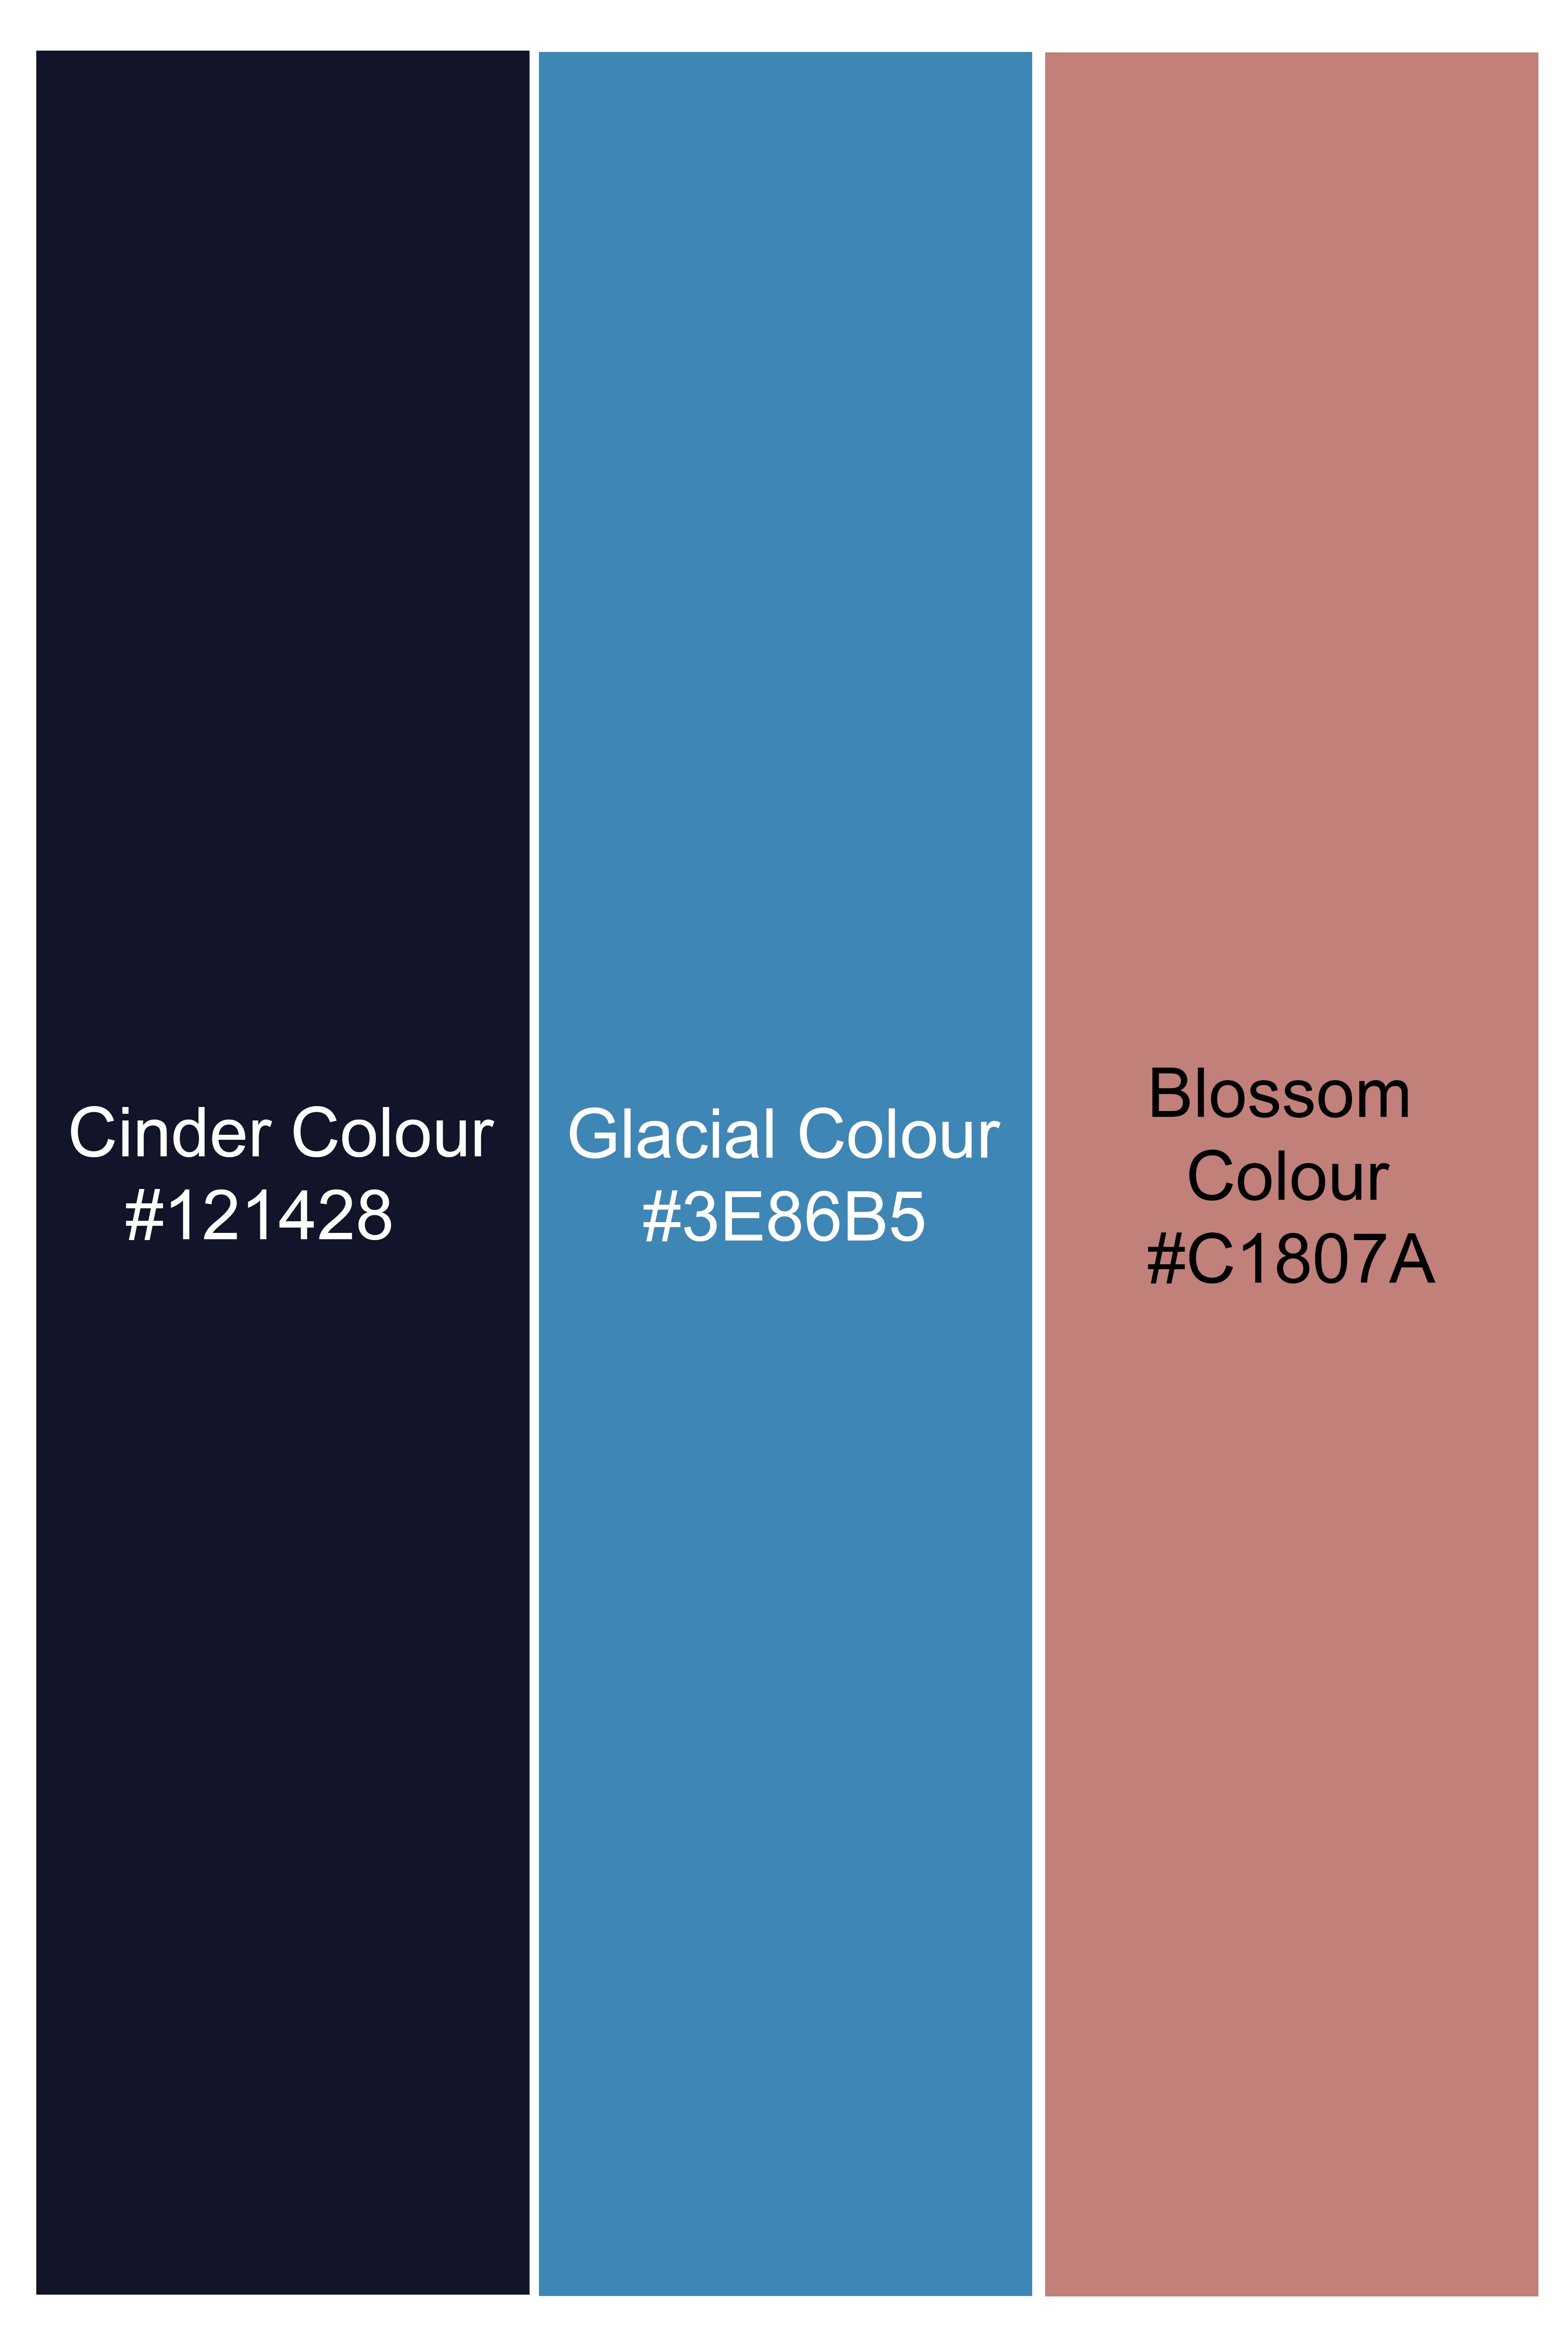 Cinder Blue Printed Premium Cotton Pique Polo TS956-S, TS956-M, TS956-L, TS956-XL, TS956-XXL